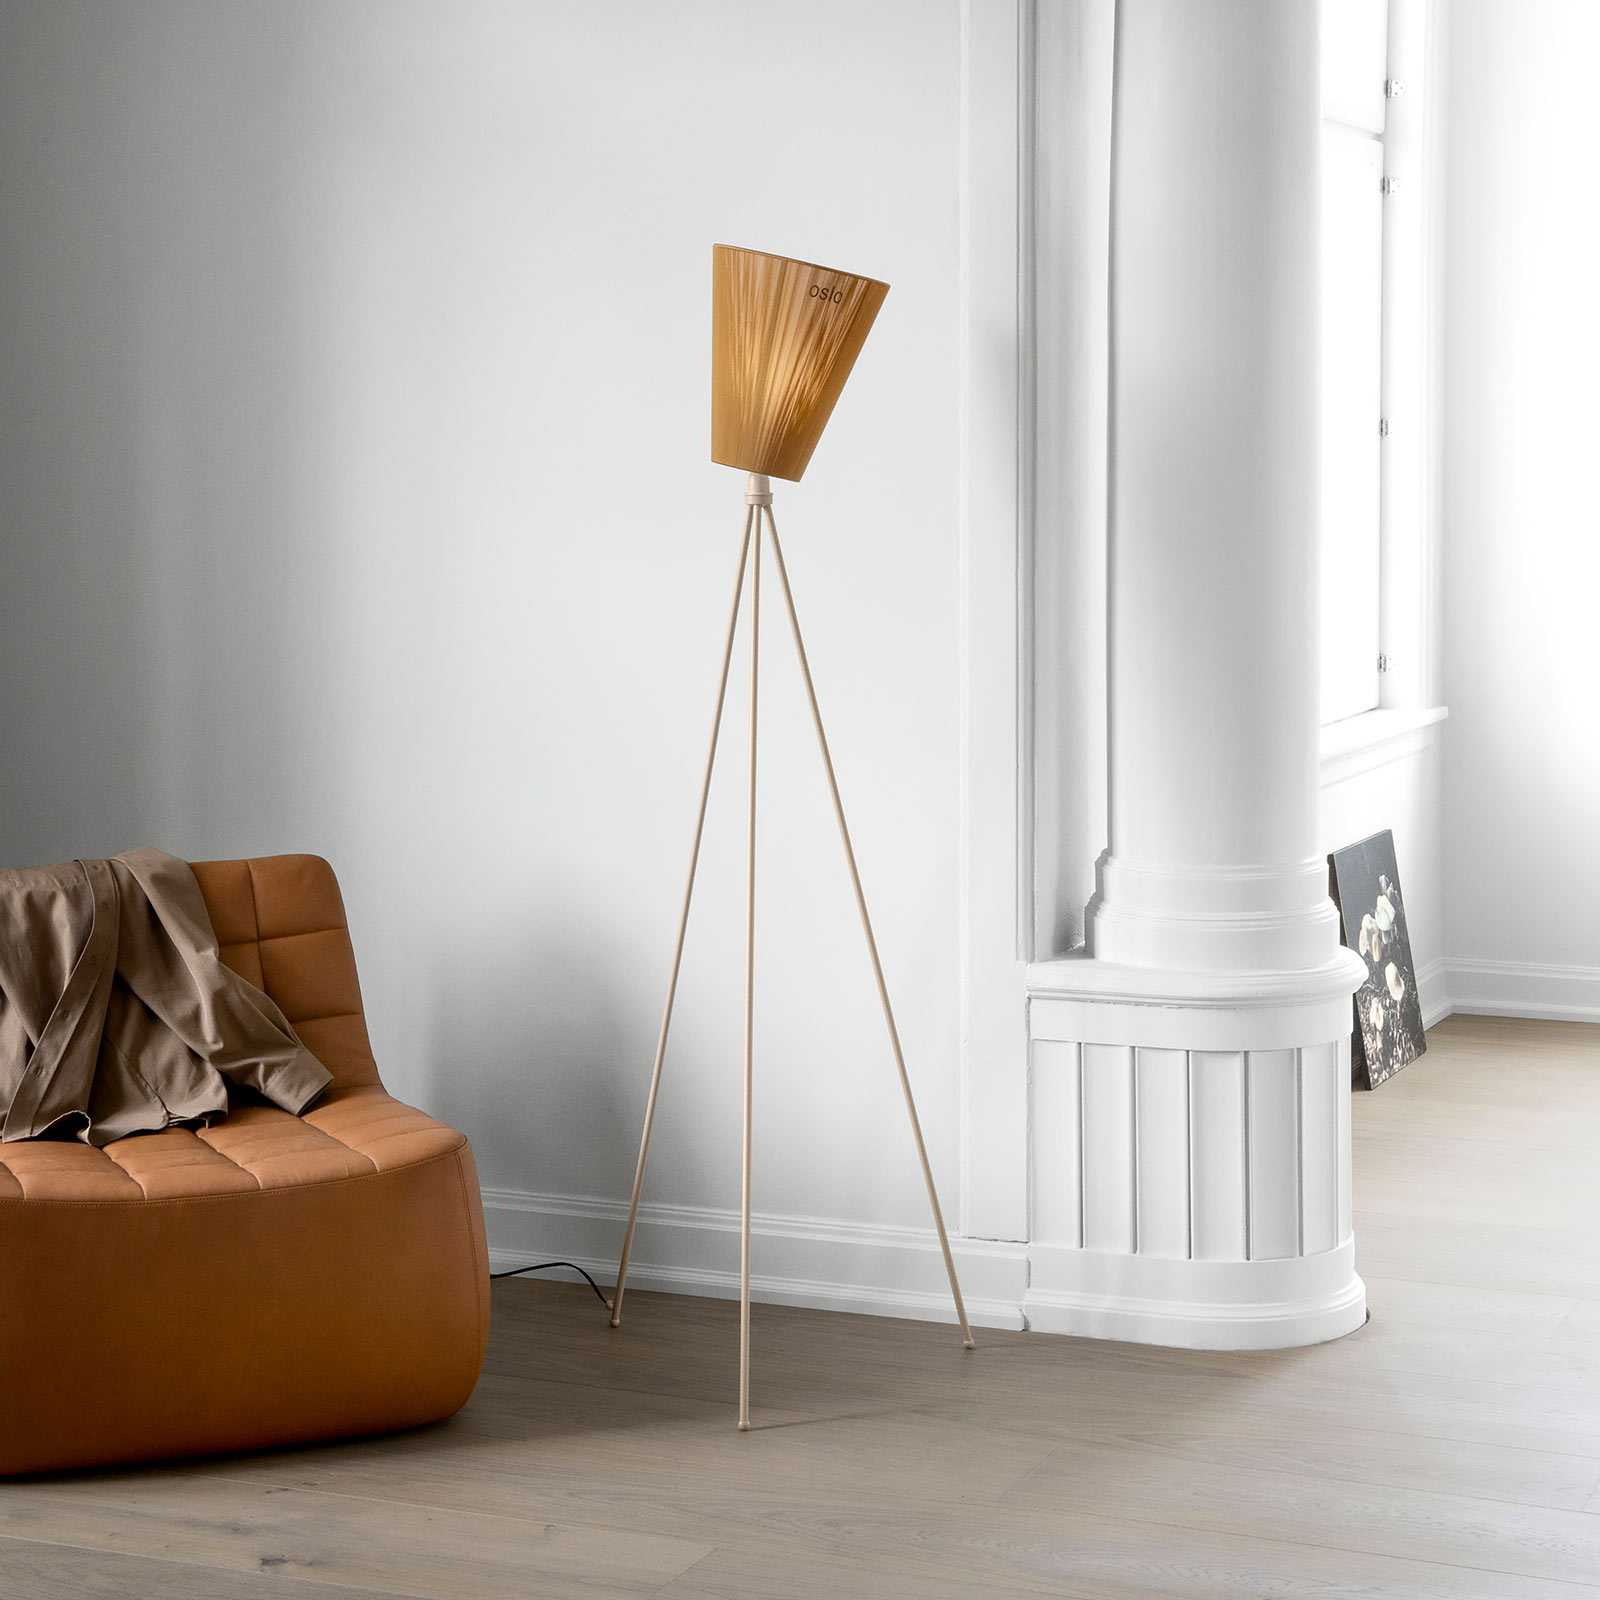 Northern Oslo Wood floor lamp caramel/beige